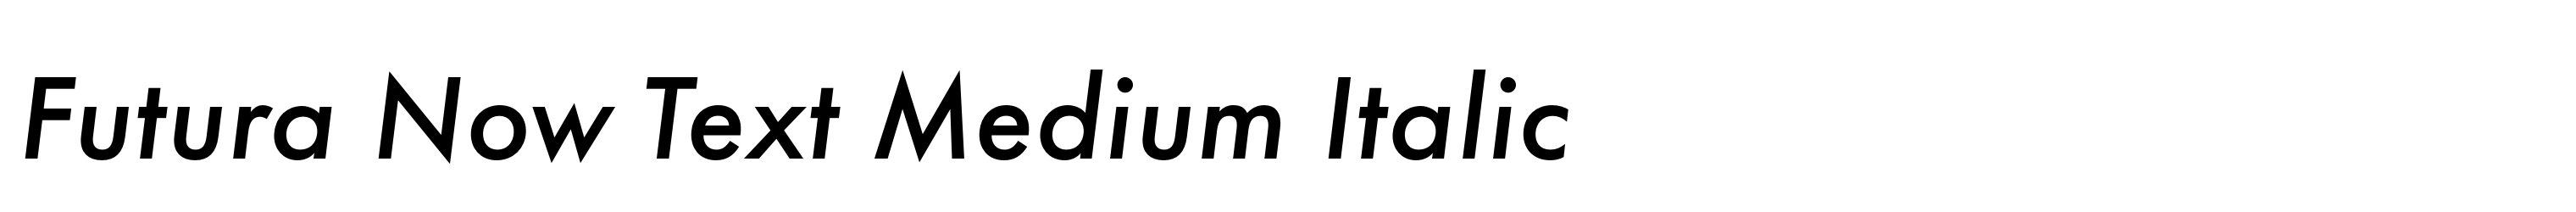 Futura Now Text Medium Italic